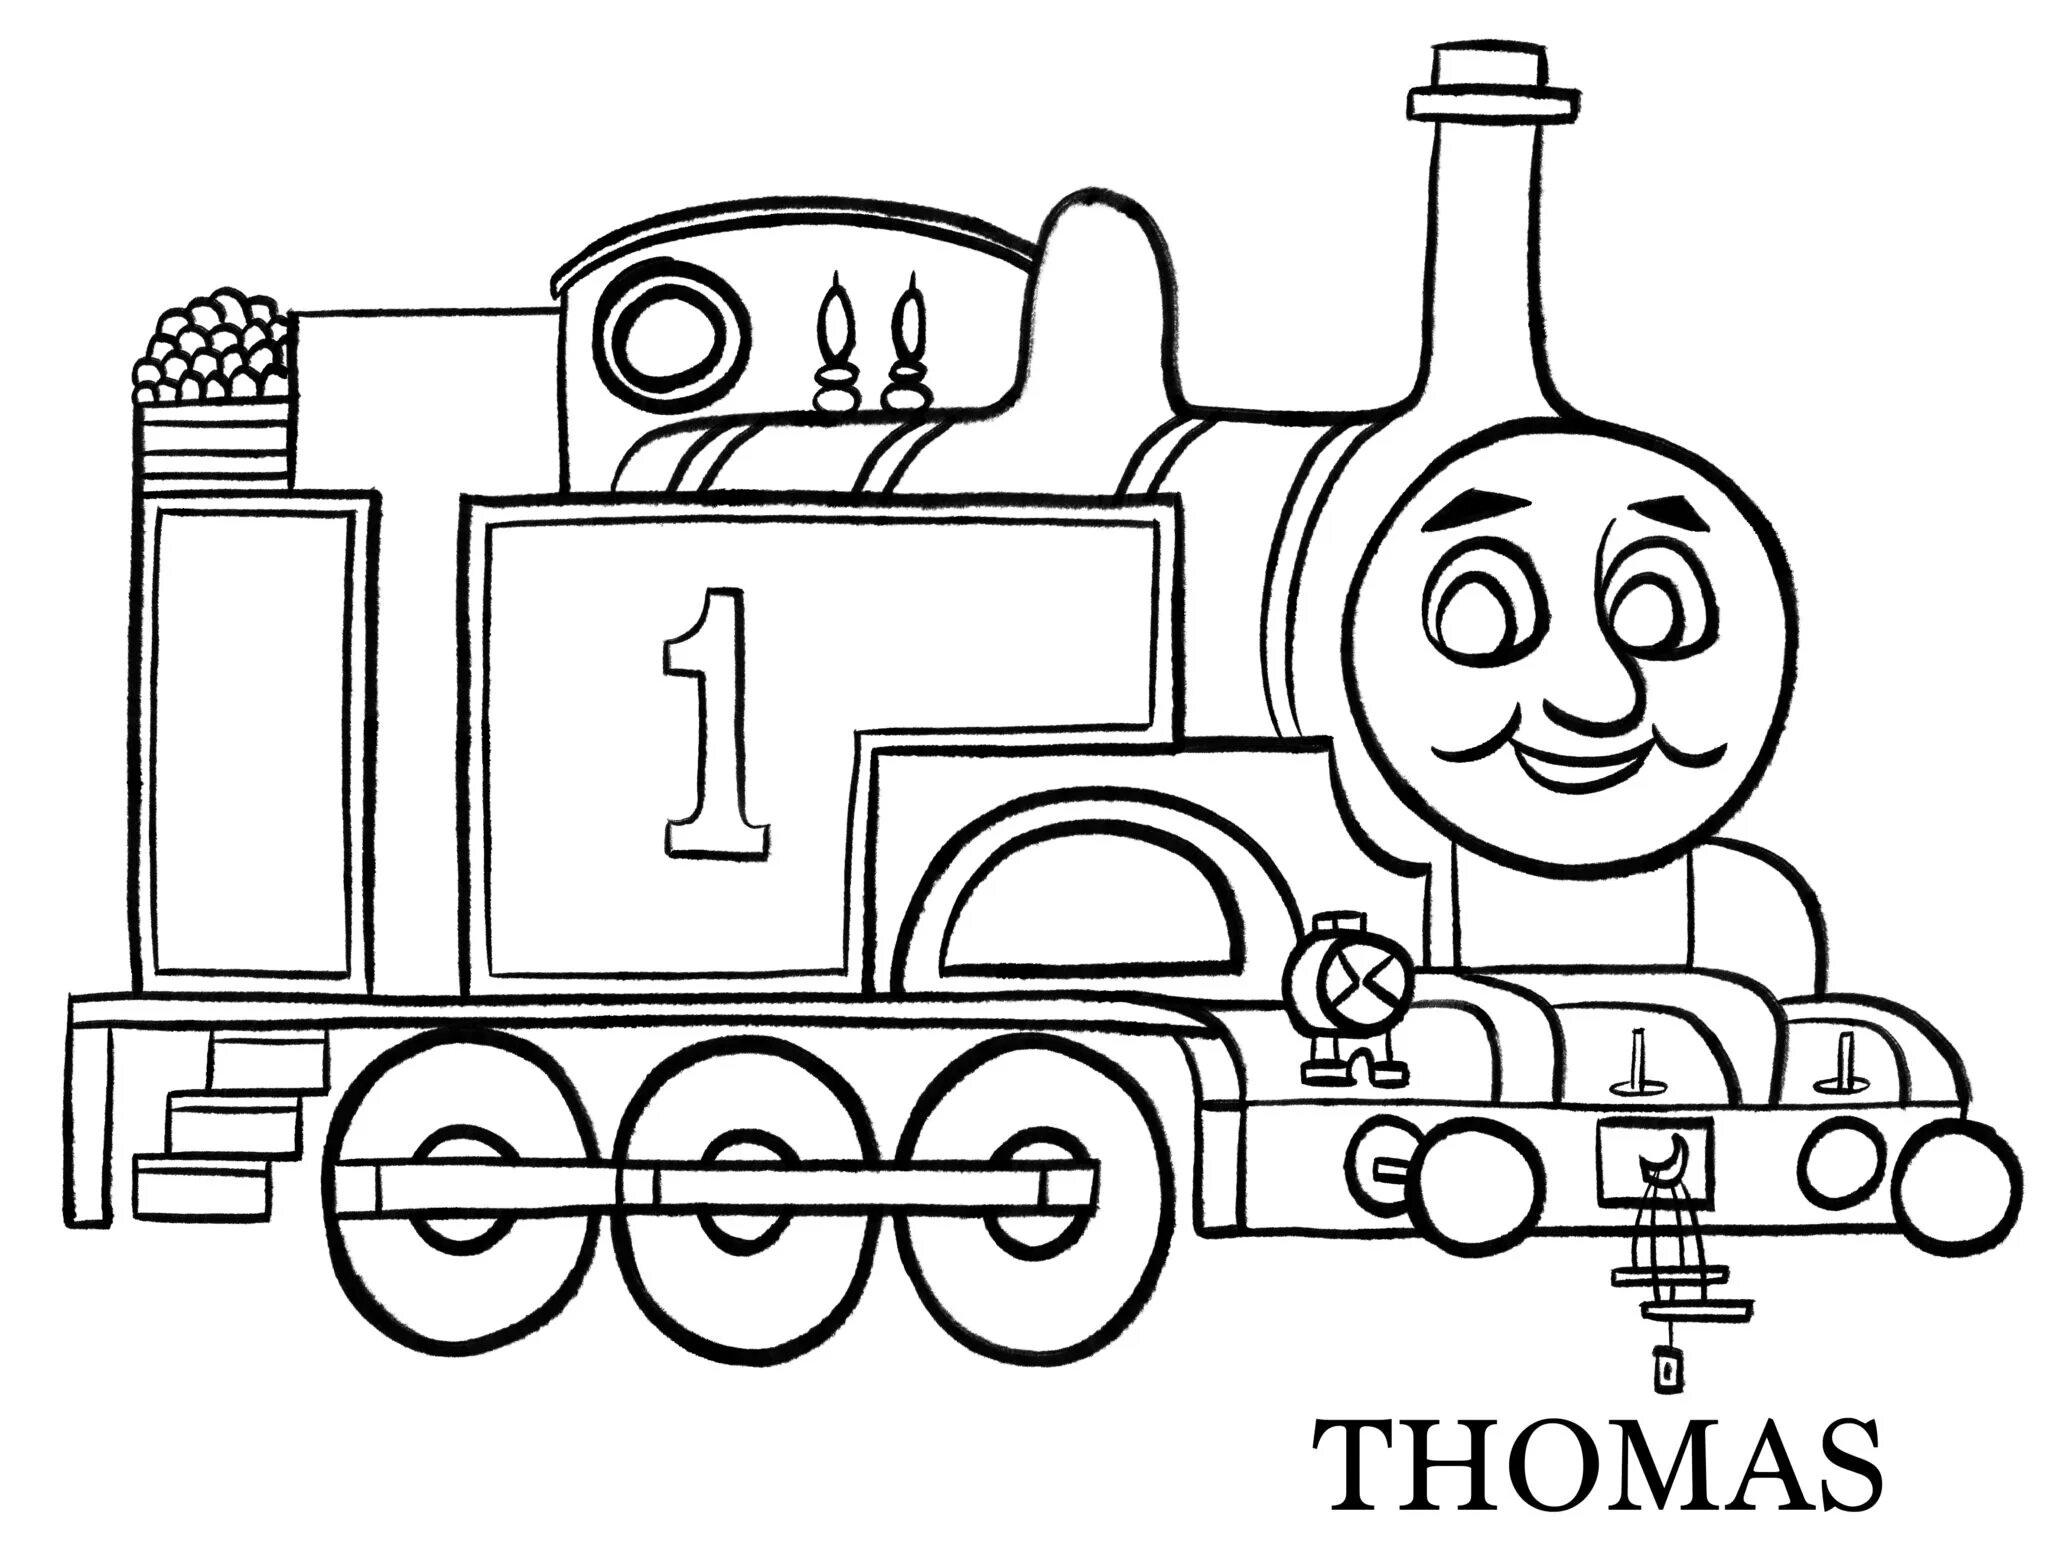 The locomotive thomas scary #3